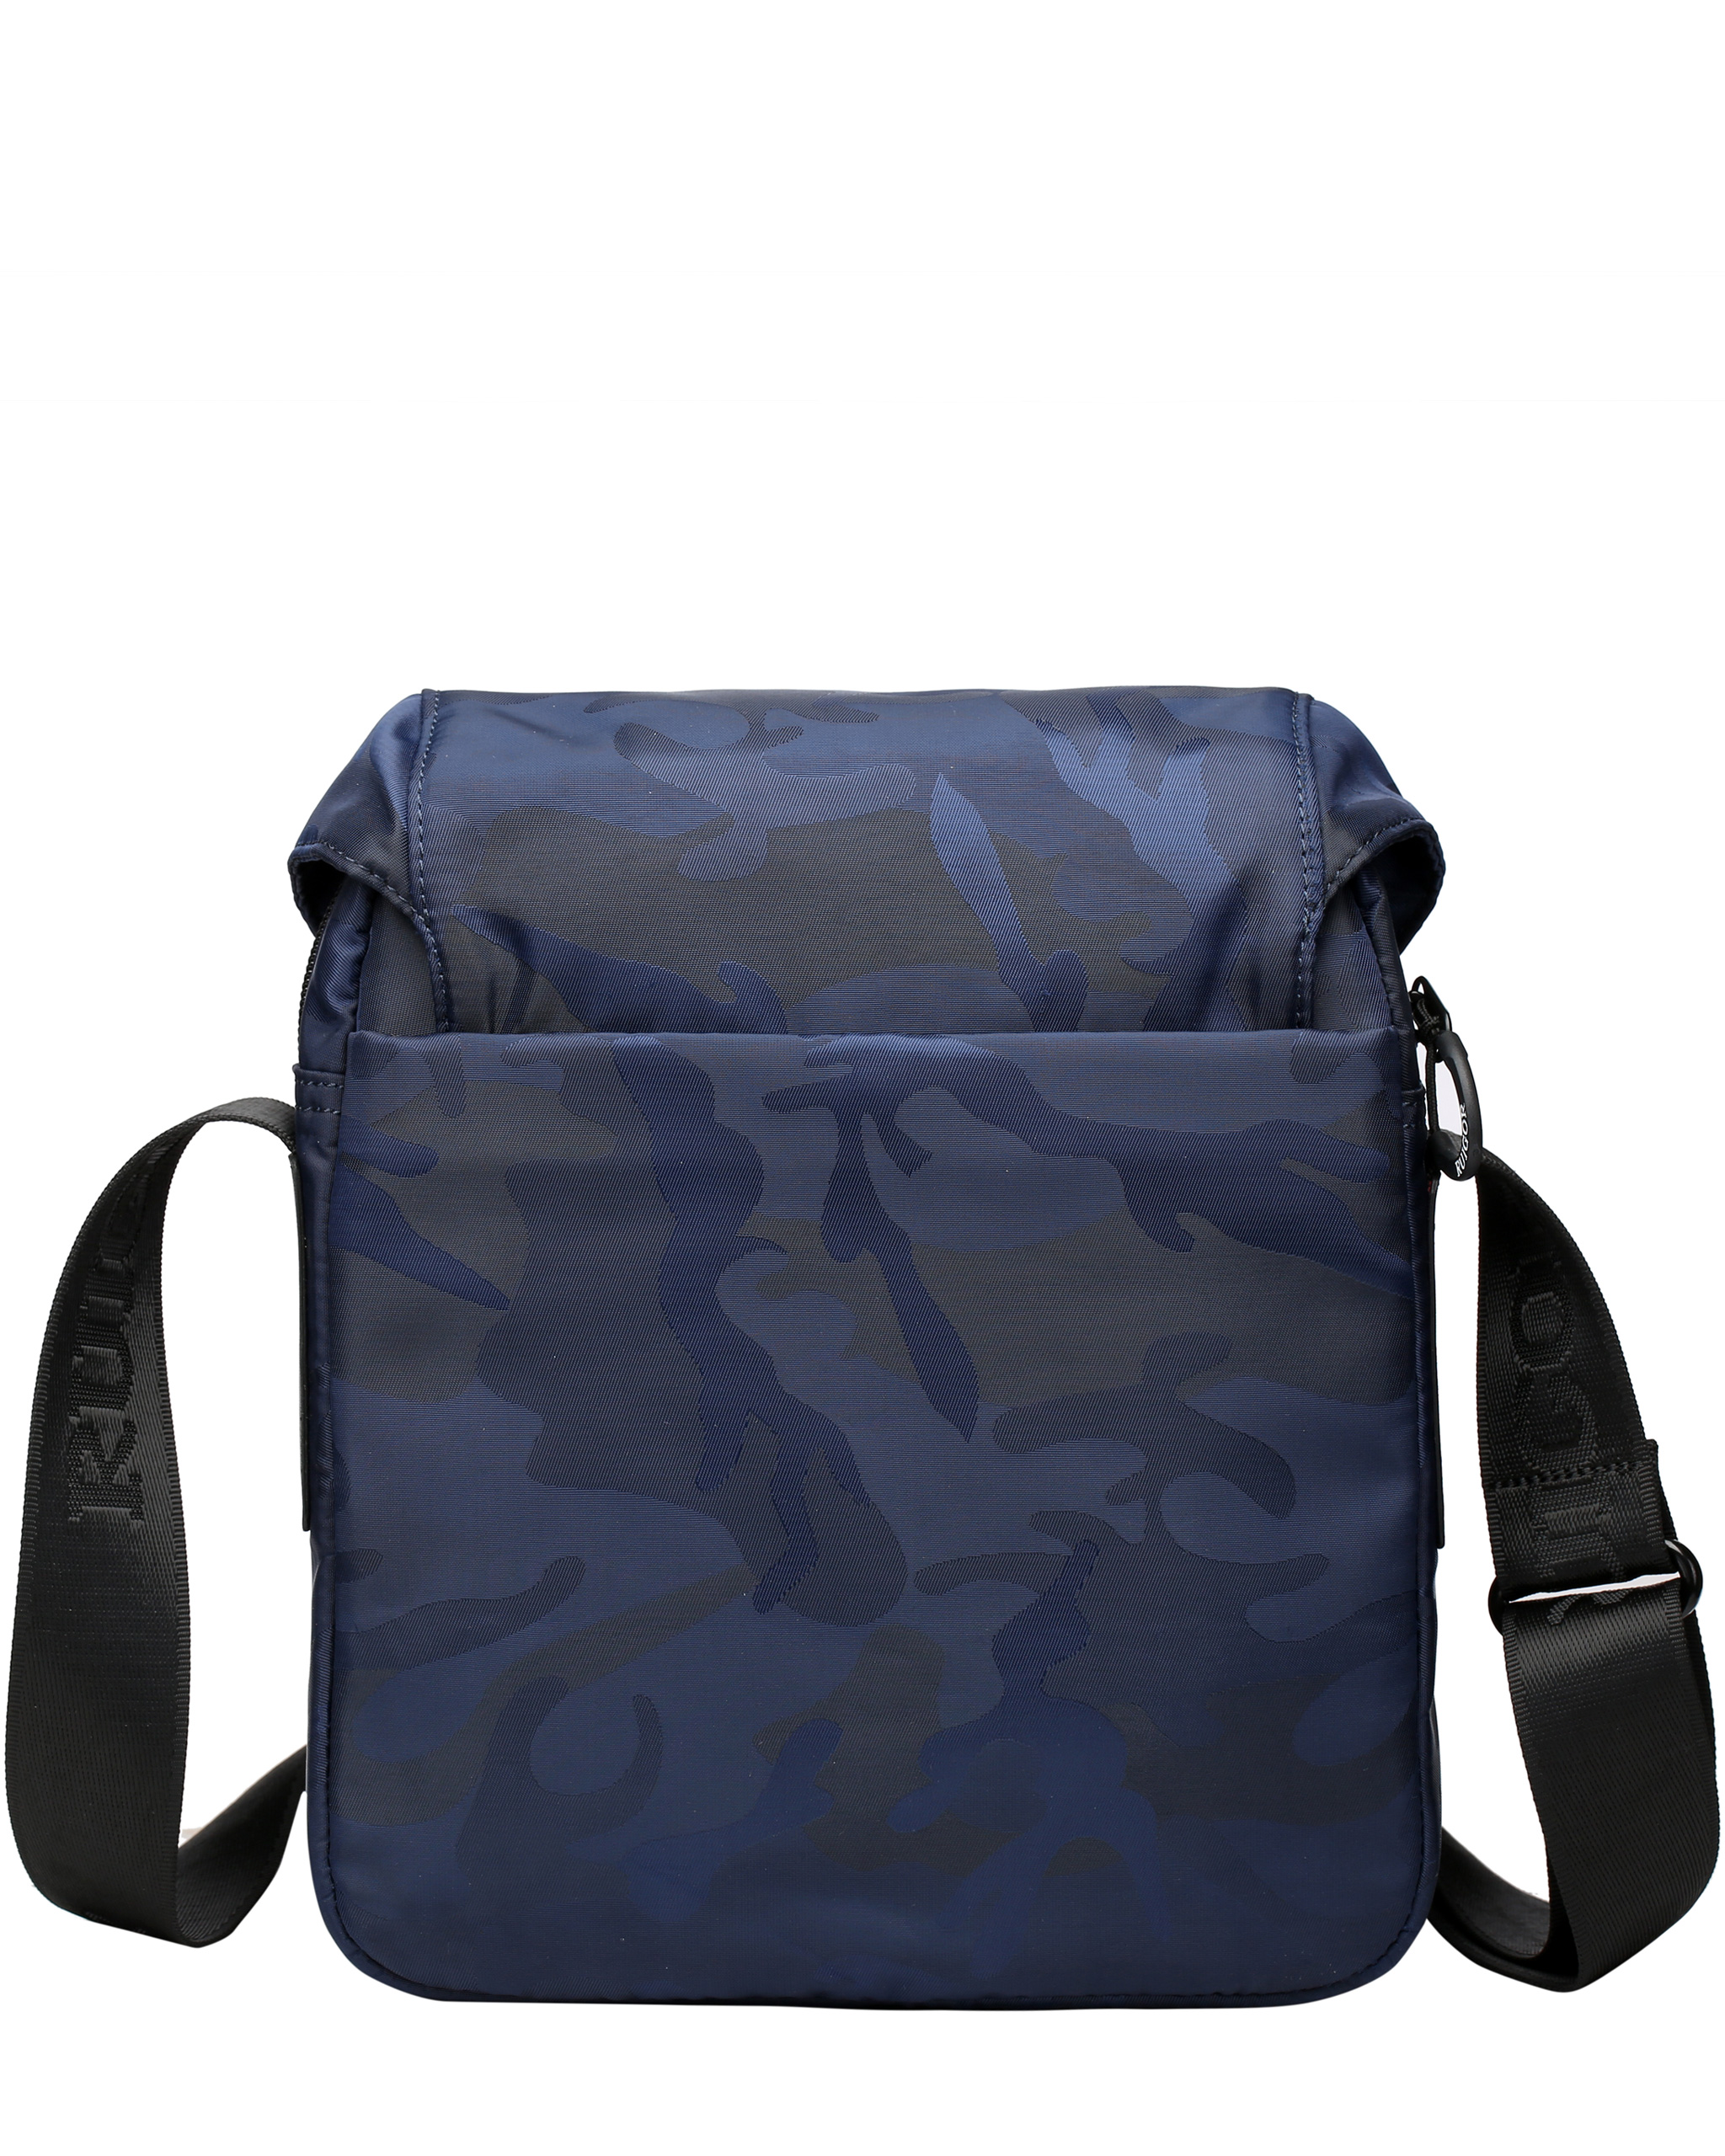 Blue Camo Commuter Bag